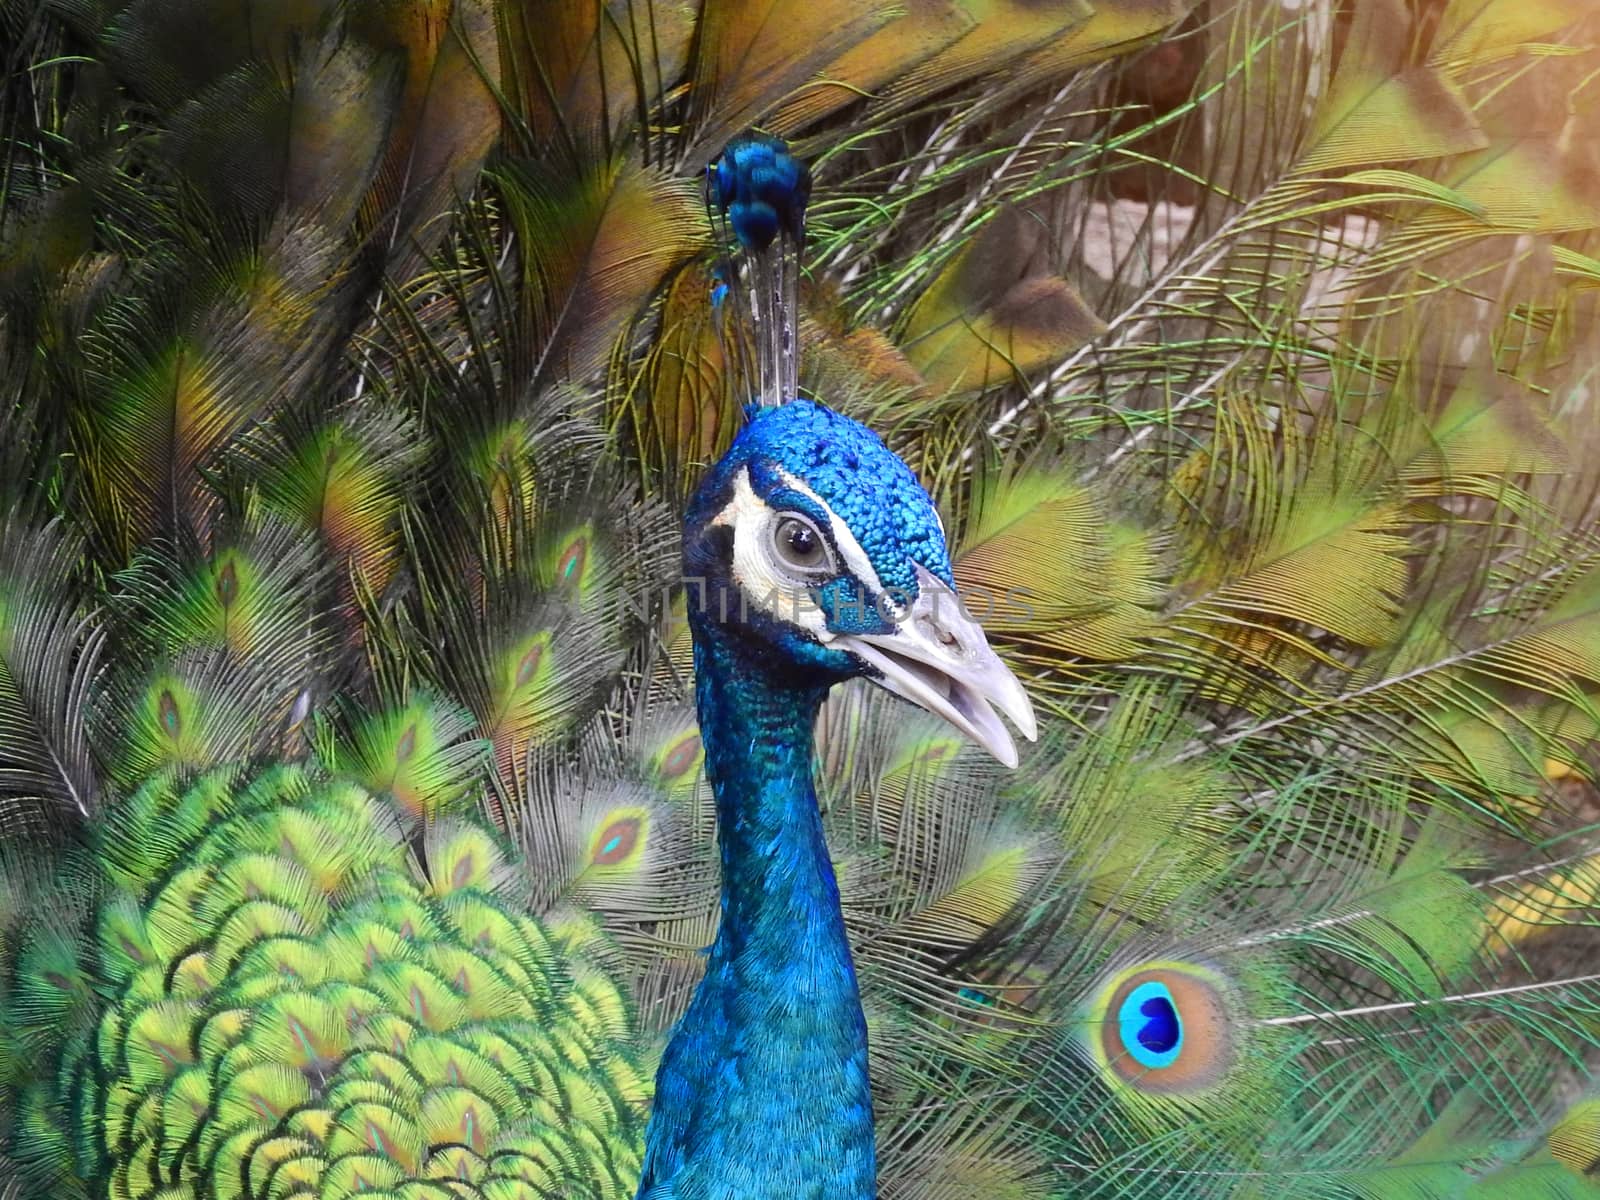 Beautiful spread of a thai peacock.